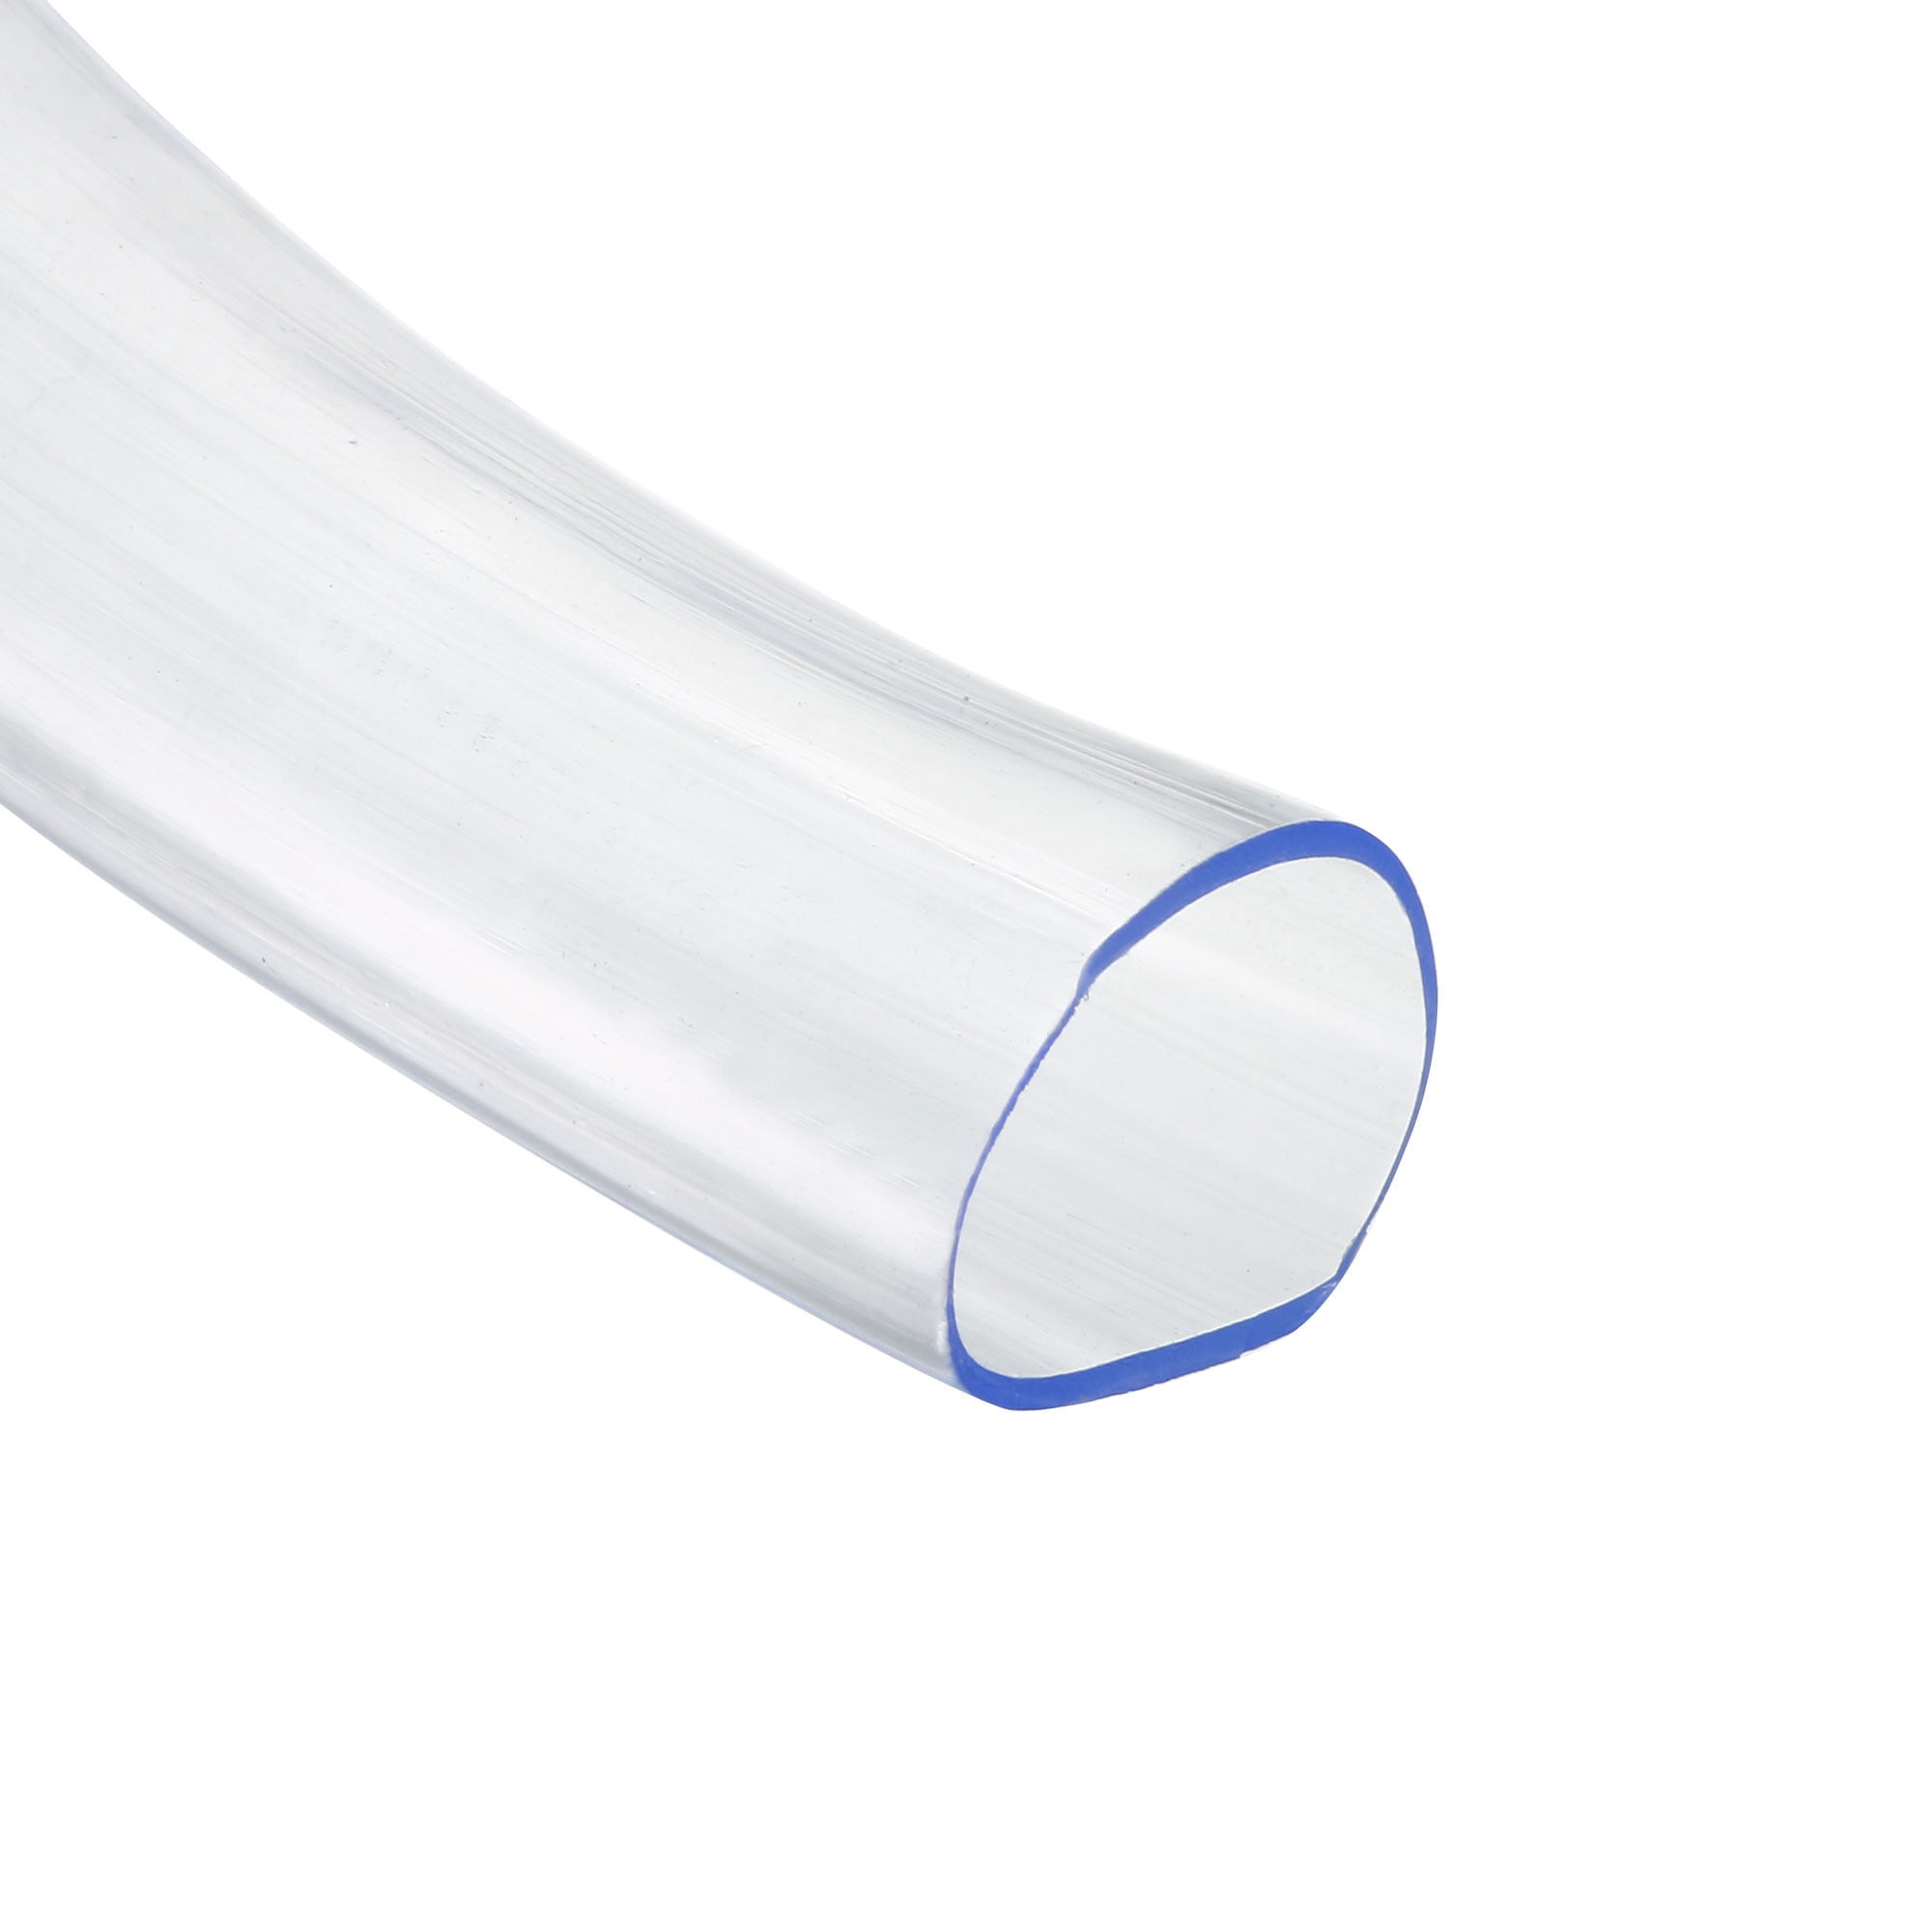 Clear Plastic Tubing 20 Ft Length 3/8" ID X 1/2" OD Flexible Vinyl Hose BPA Free 